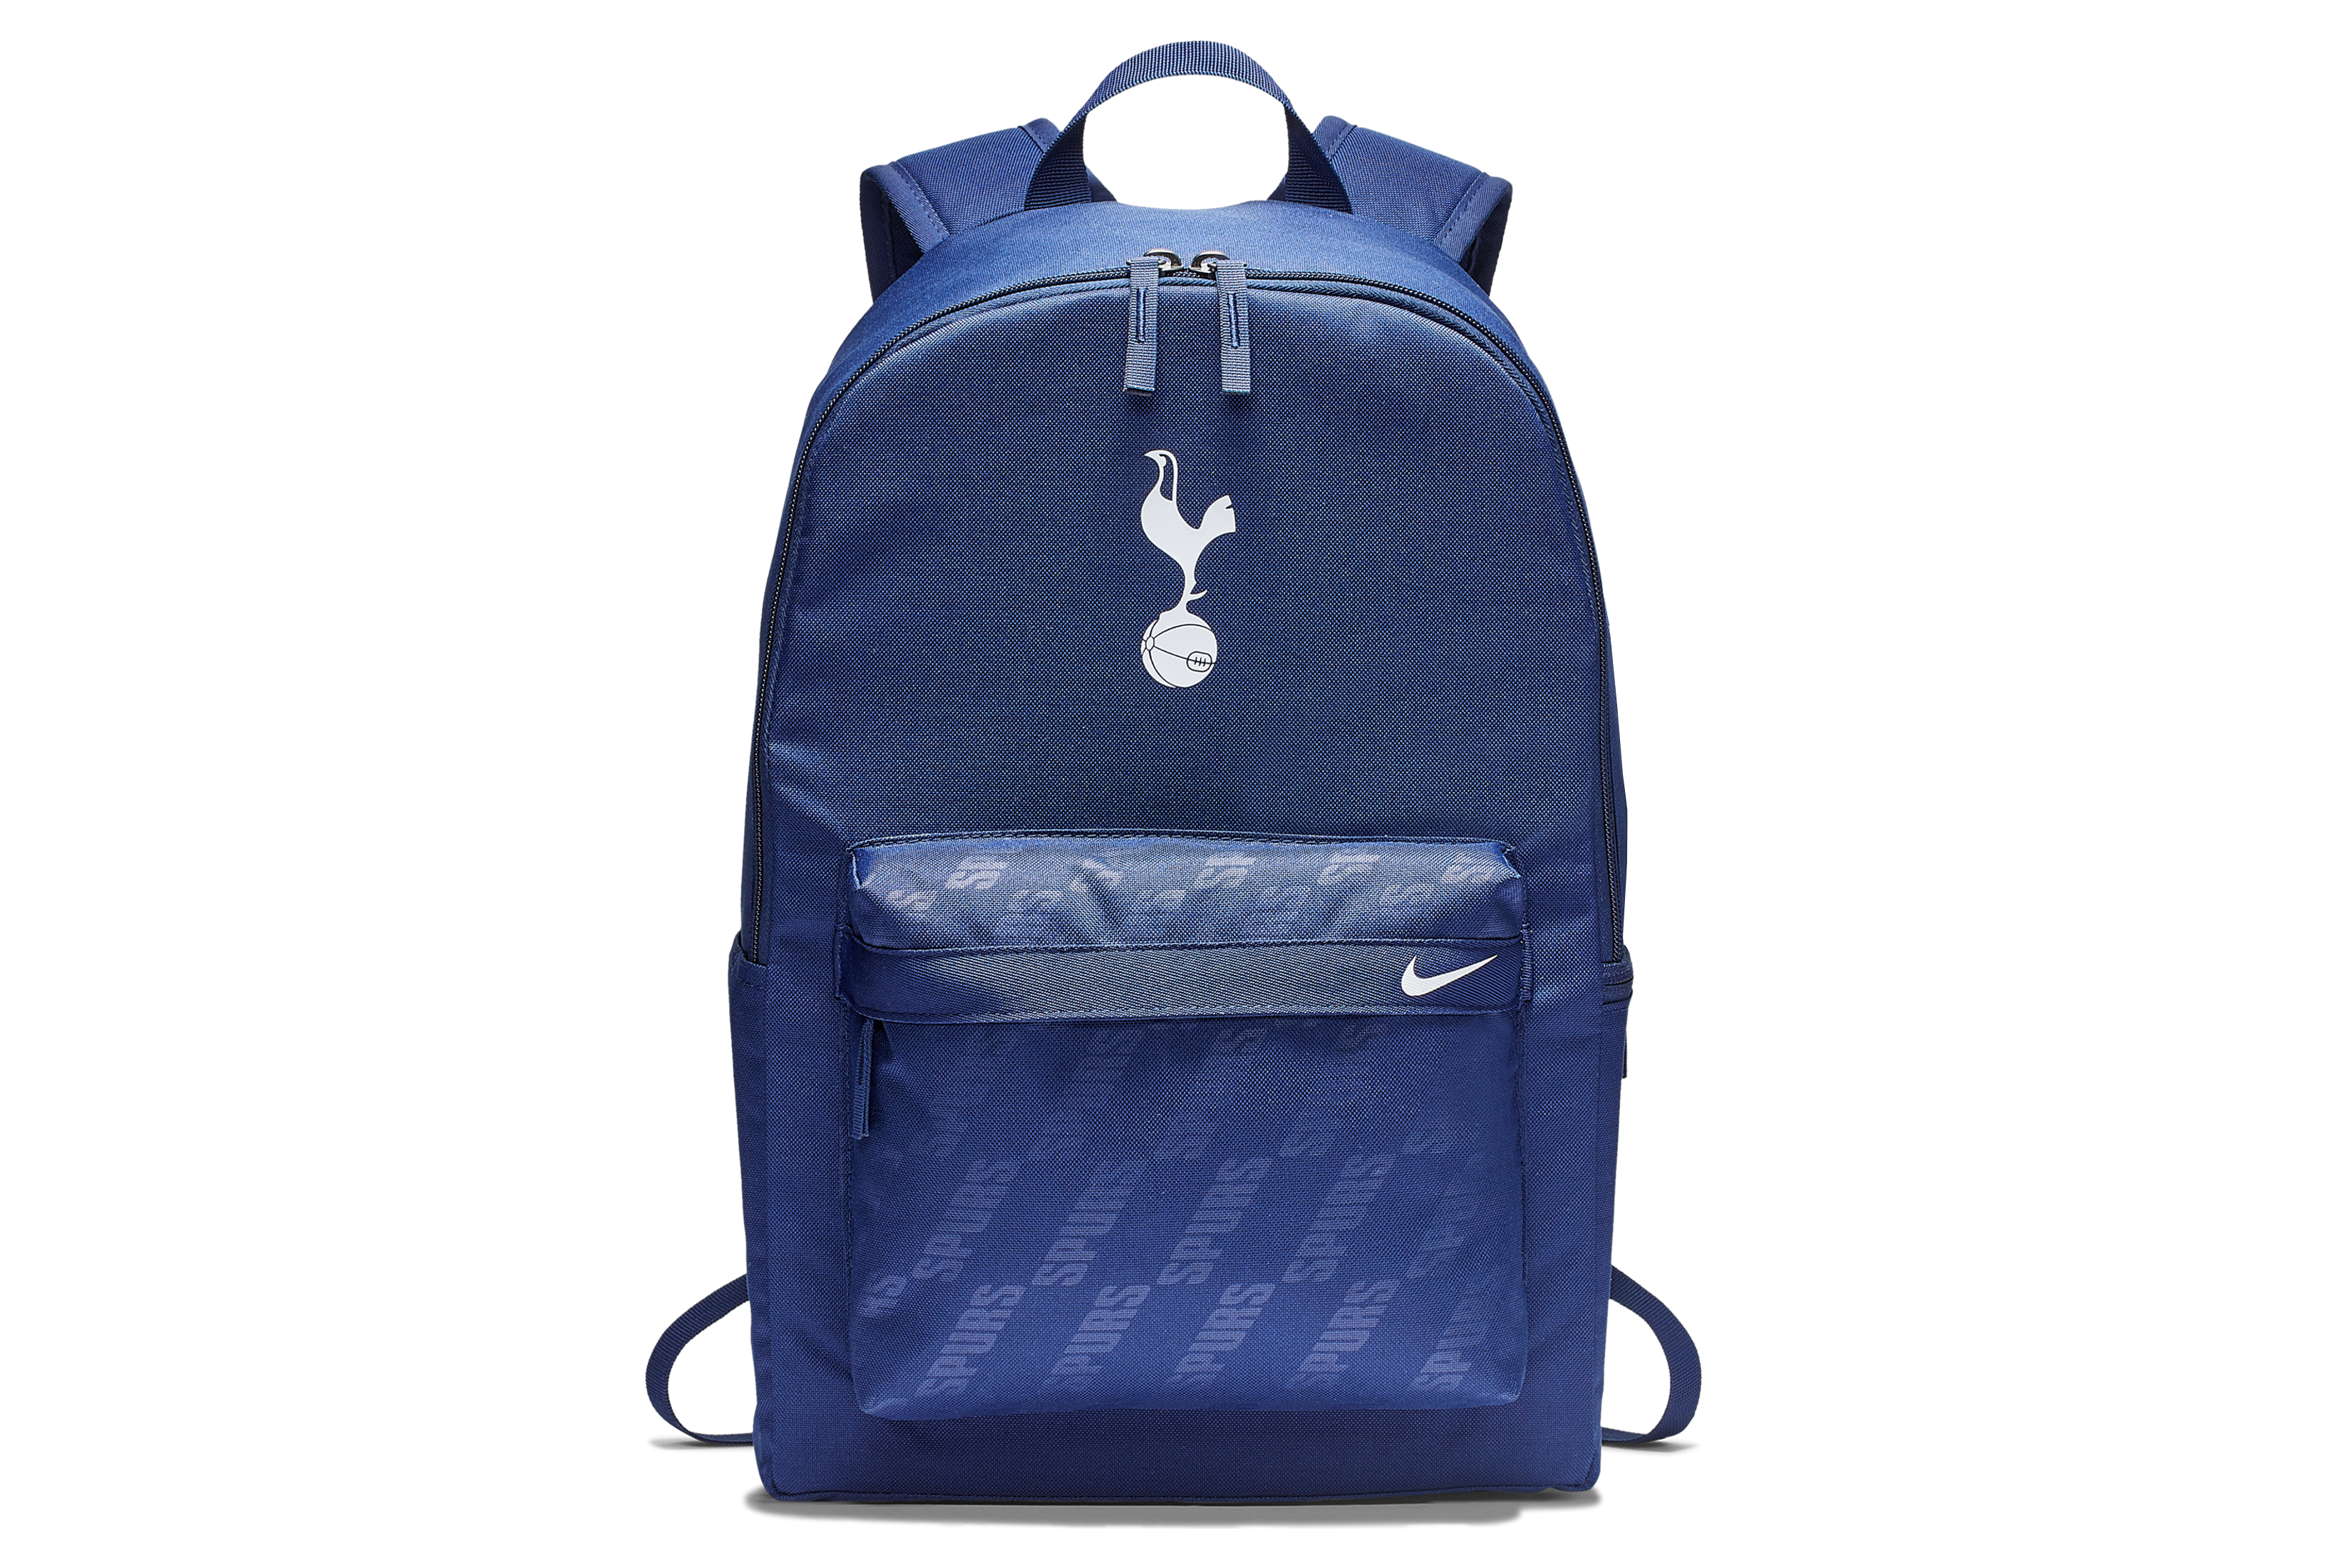 Tottenham Hotspur F.c. Bungee 17 Backpack : Target